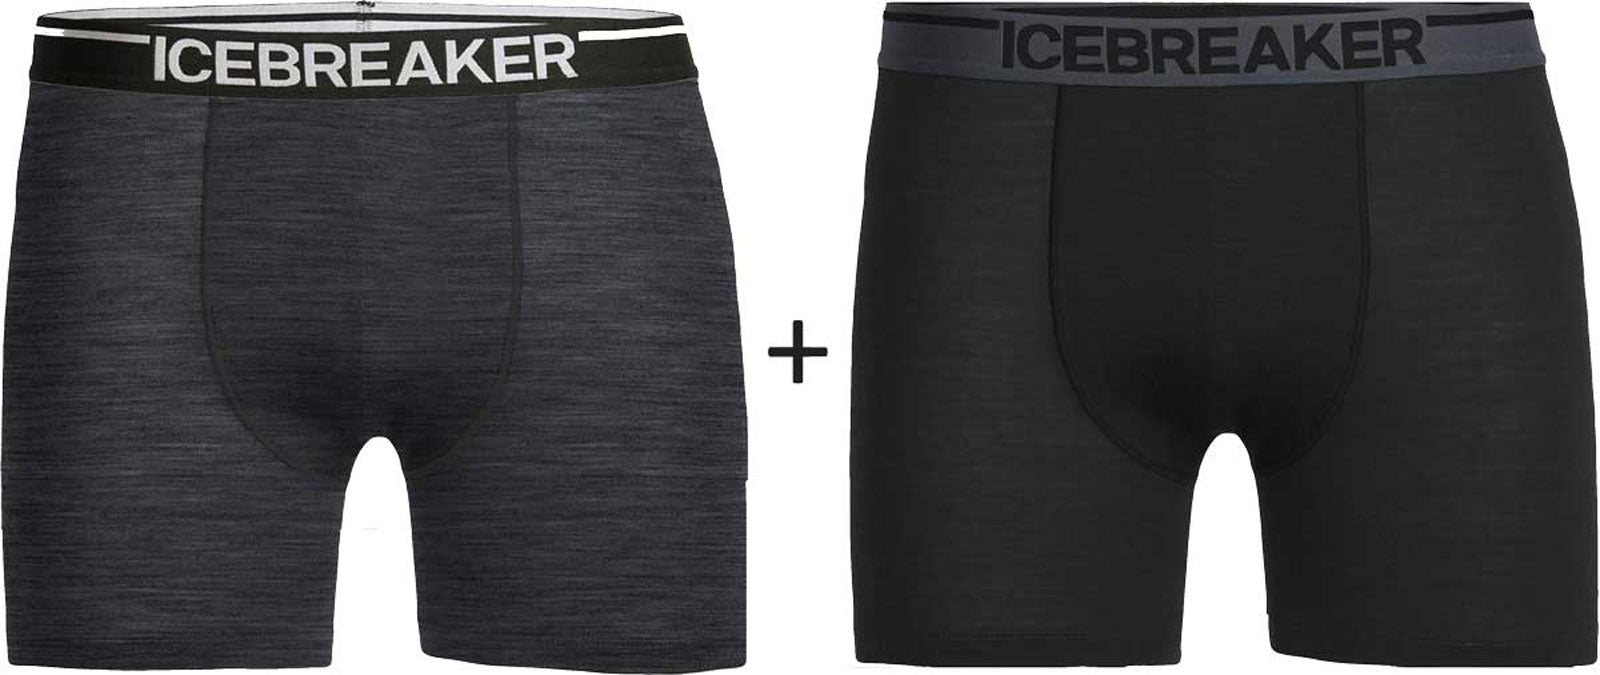 Men's Icebreaker Anatomica Boxer Briefs MULTI PACK {IC-103029-MULTI}